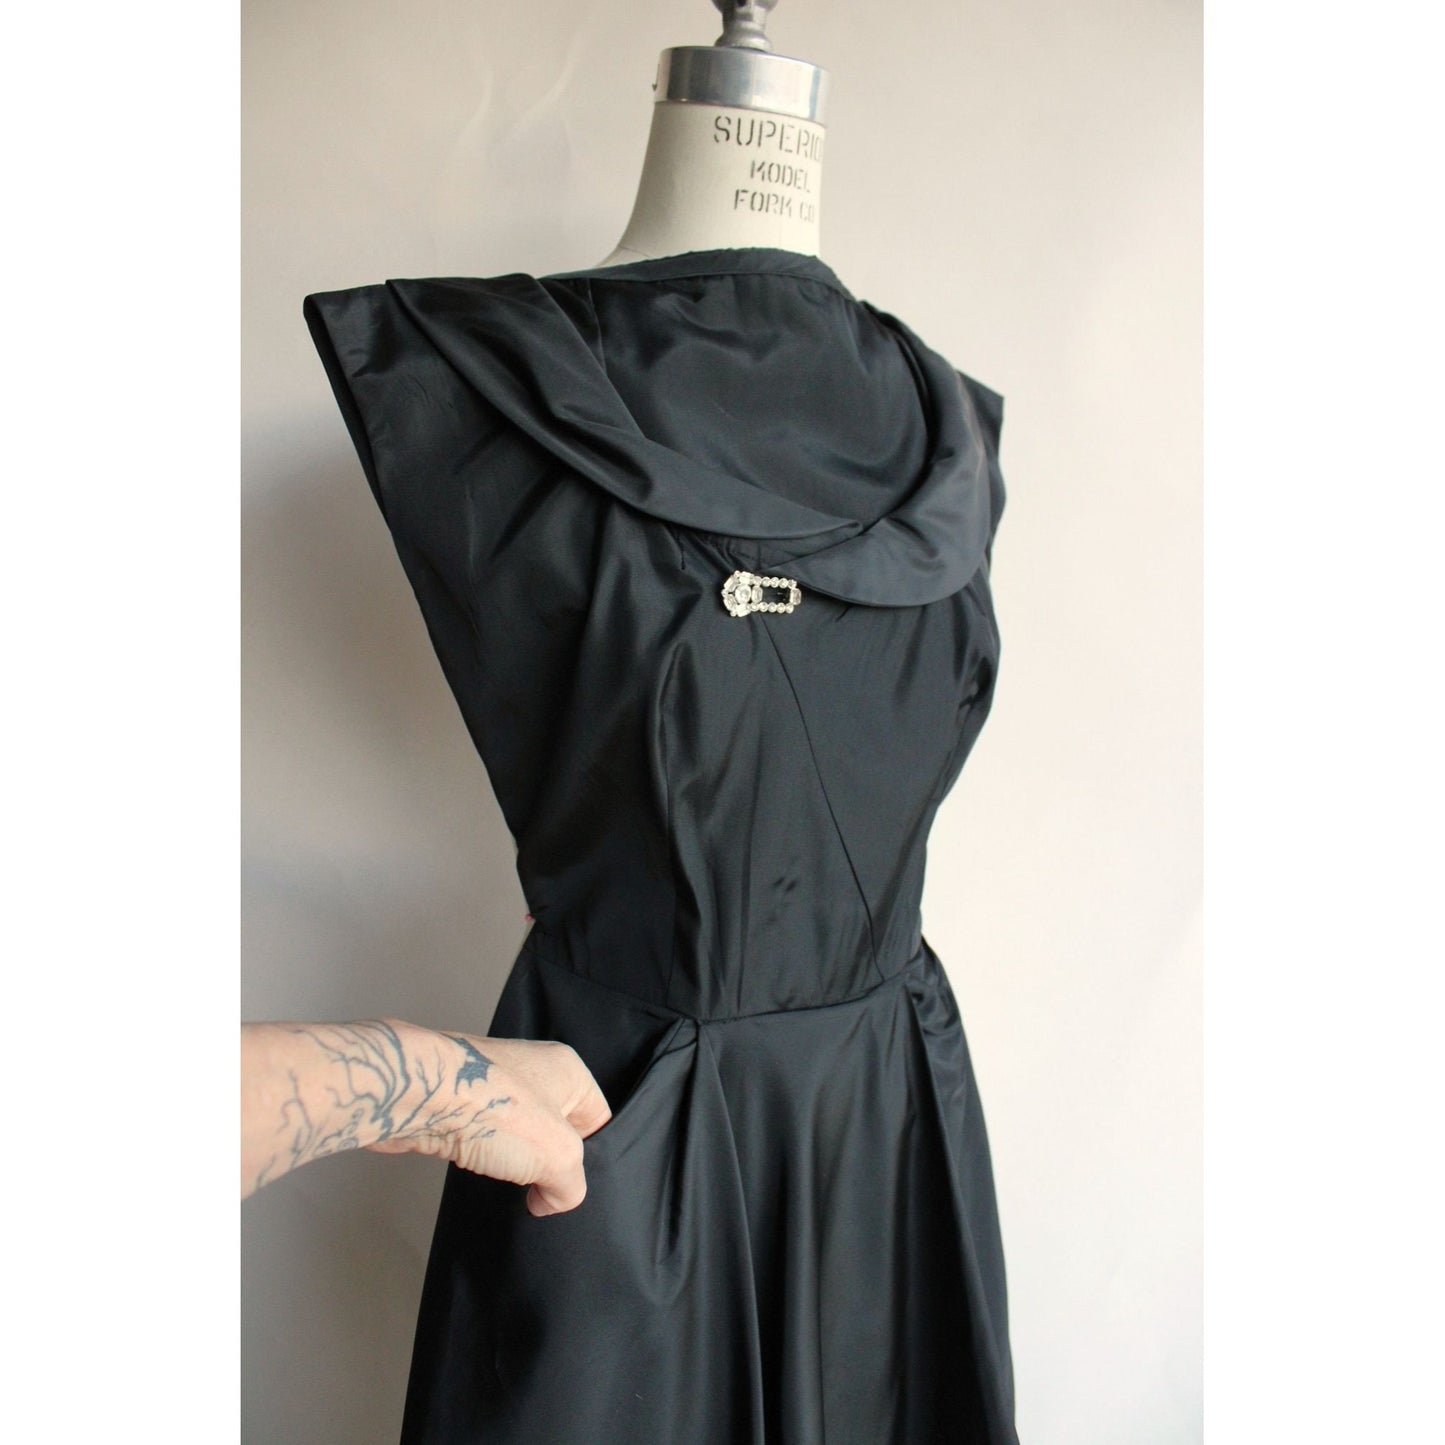 Vintage 1950s Black Taffeta Dress With Rhinestones and Hip Swag